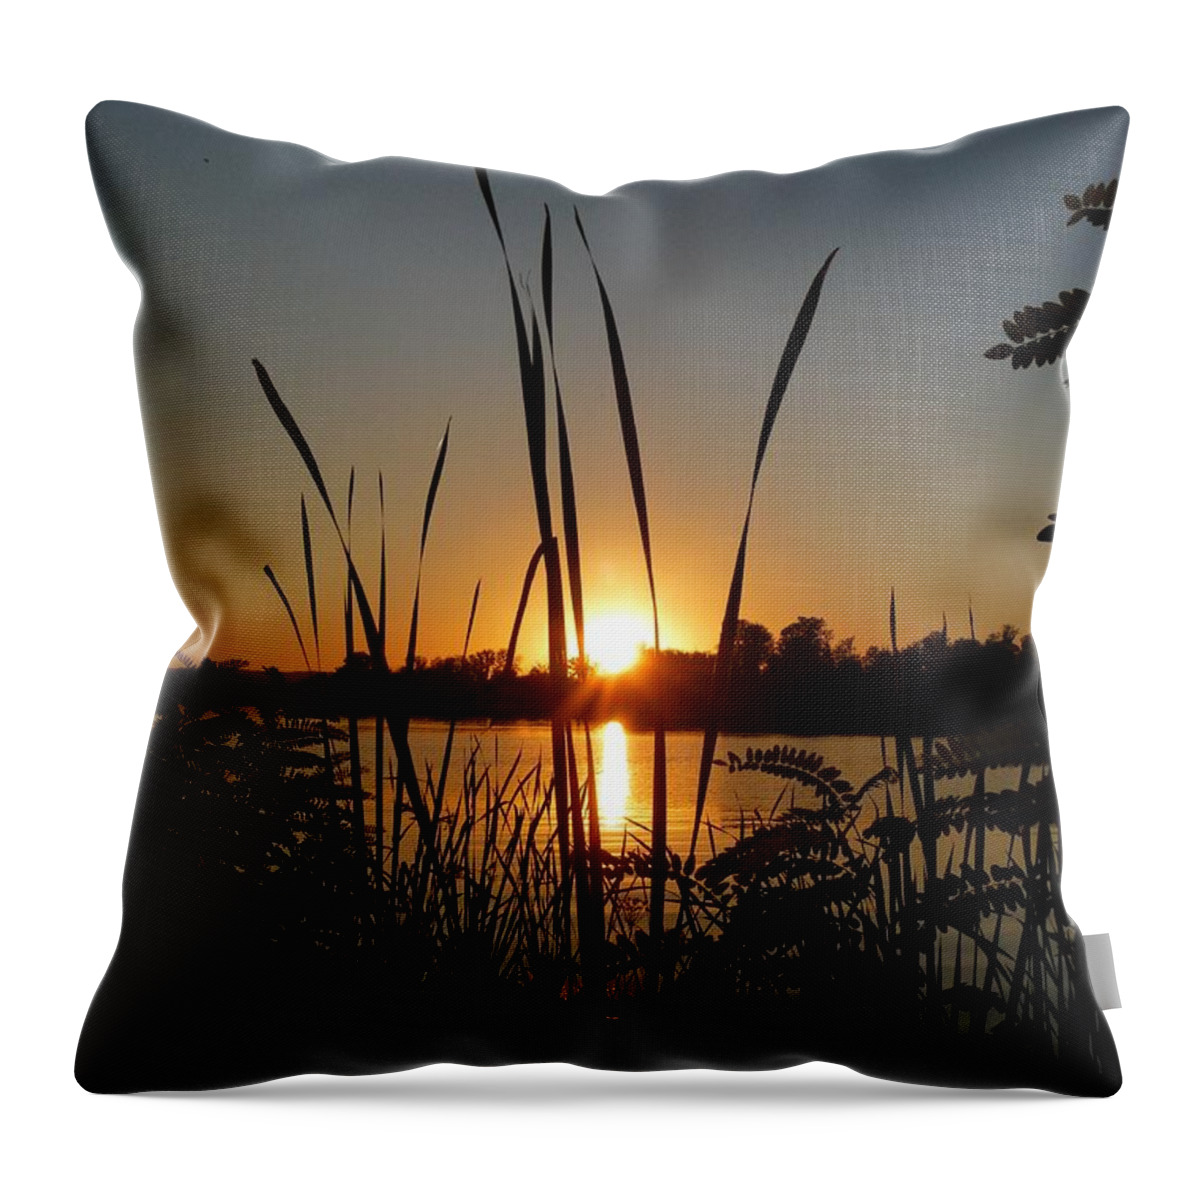 Sundown Throw Pillow featuring the photograph Sundown over the Silver Lake by Amalia Suruceanu